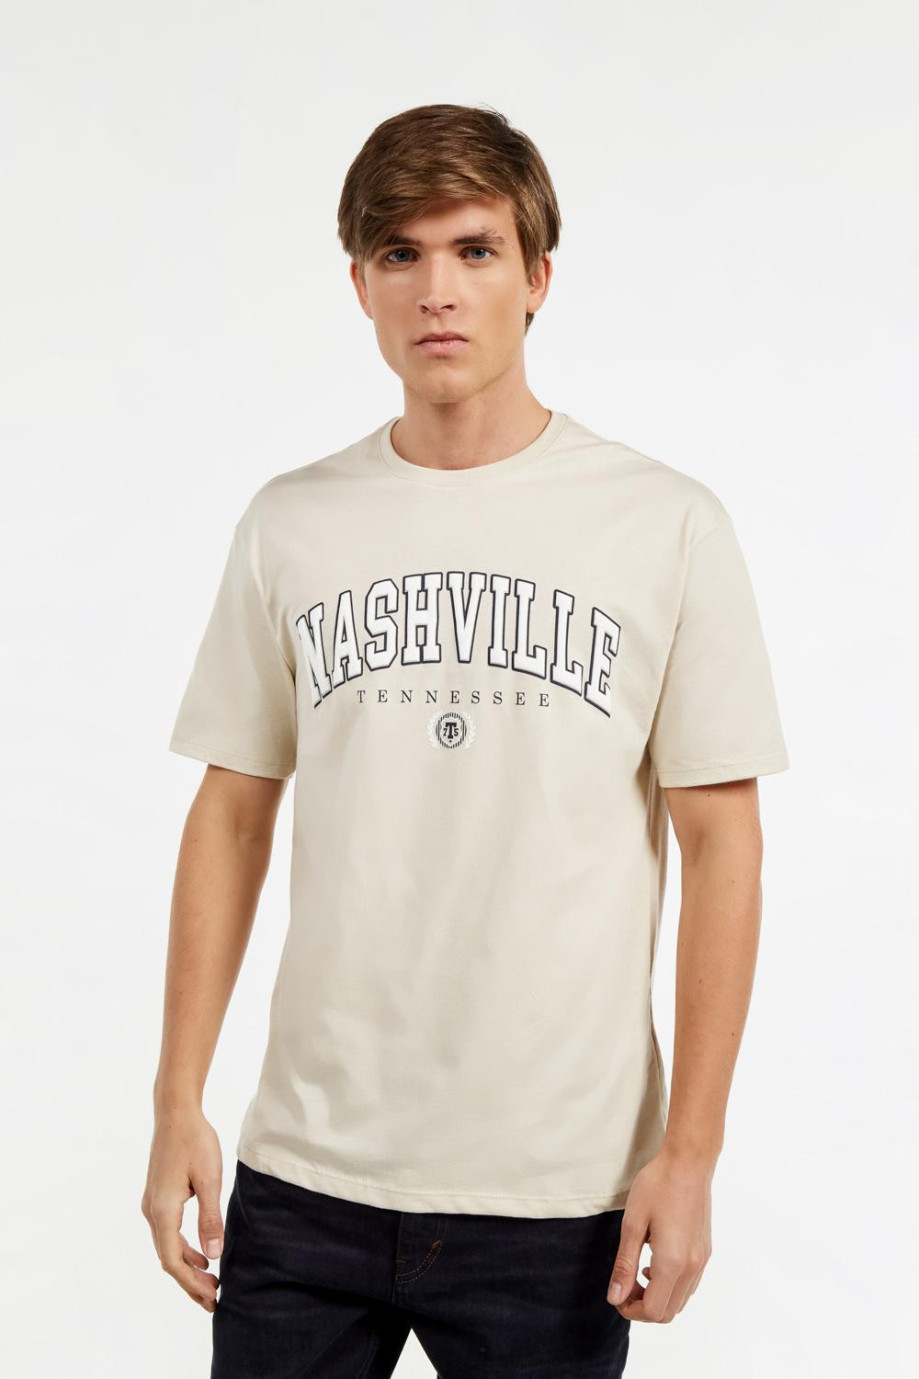 Camiseta manga corta kaky clara con diseño college de Nashville